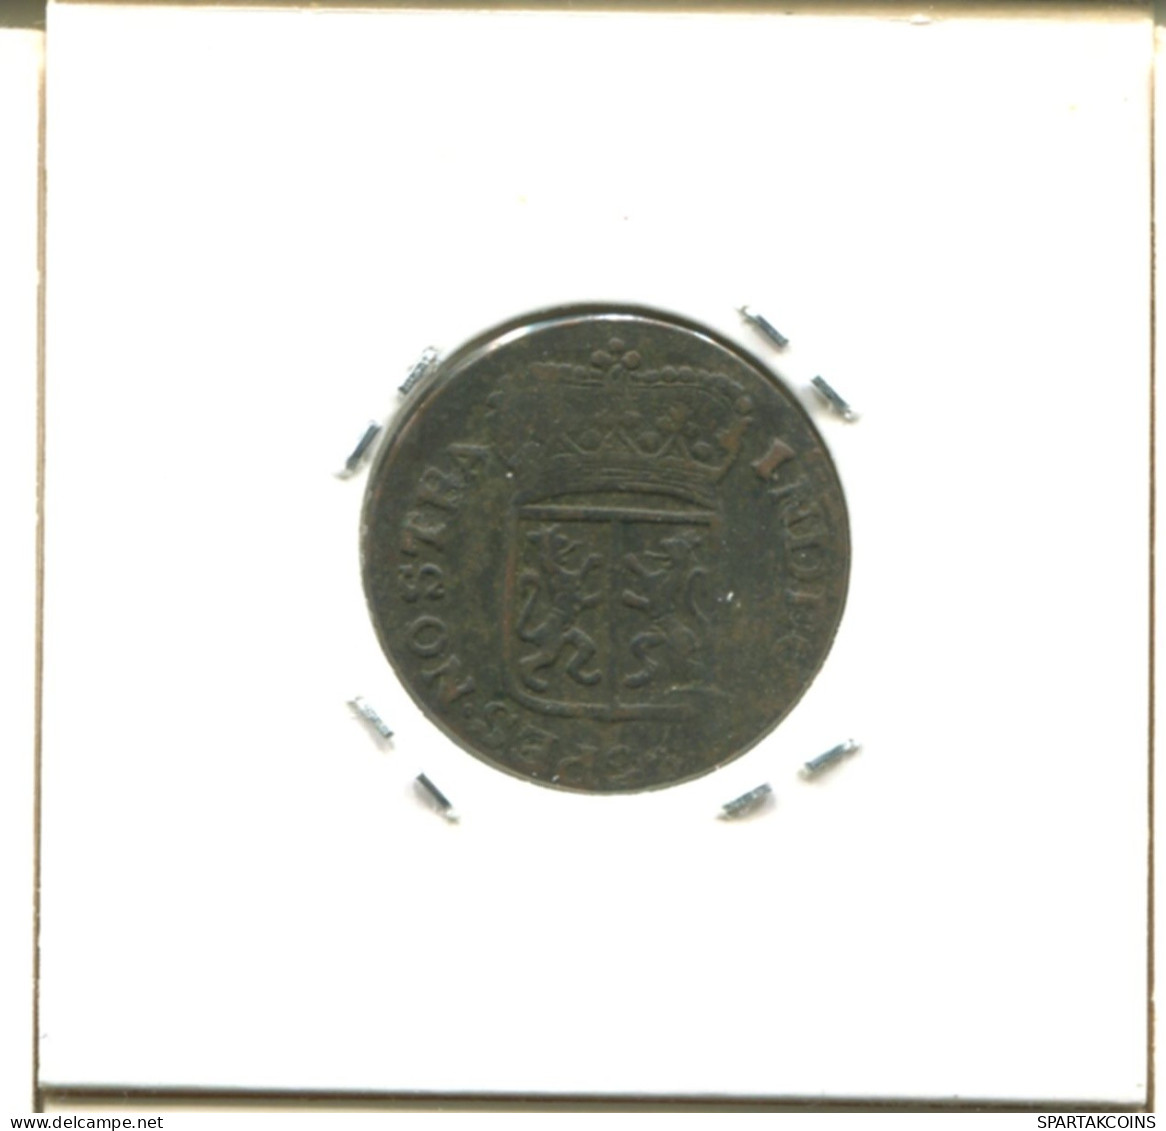 1790 GELDERLAND VOC DUIT NIEDERLANDE OSTINDIEN NY COLONIAL PENNY #E16884.8.D.A - Dutch East Indies